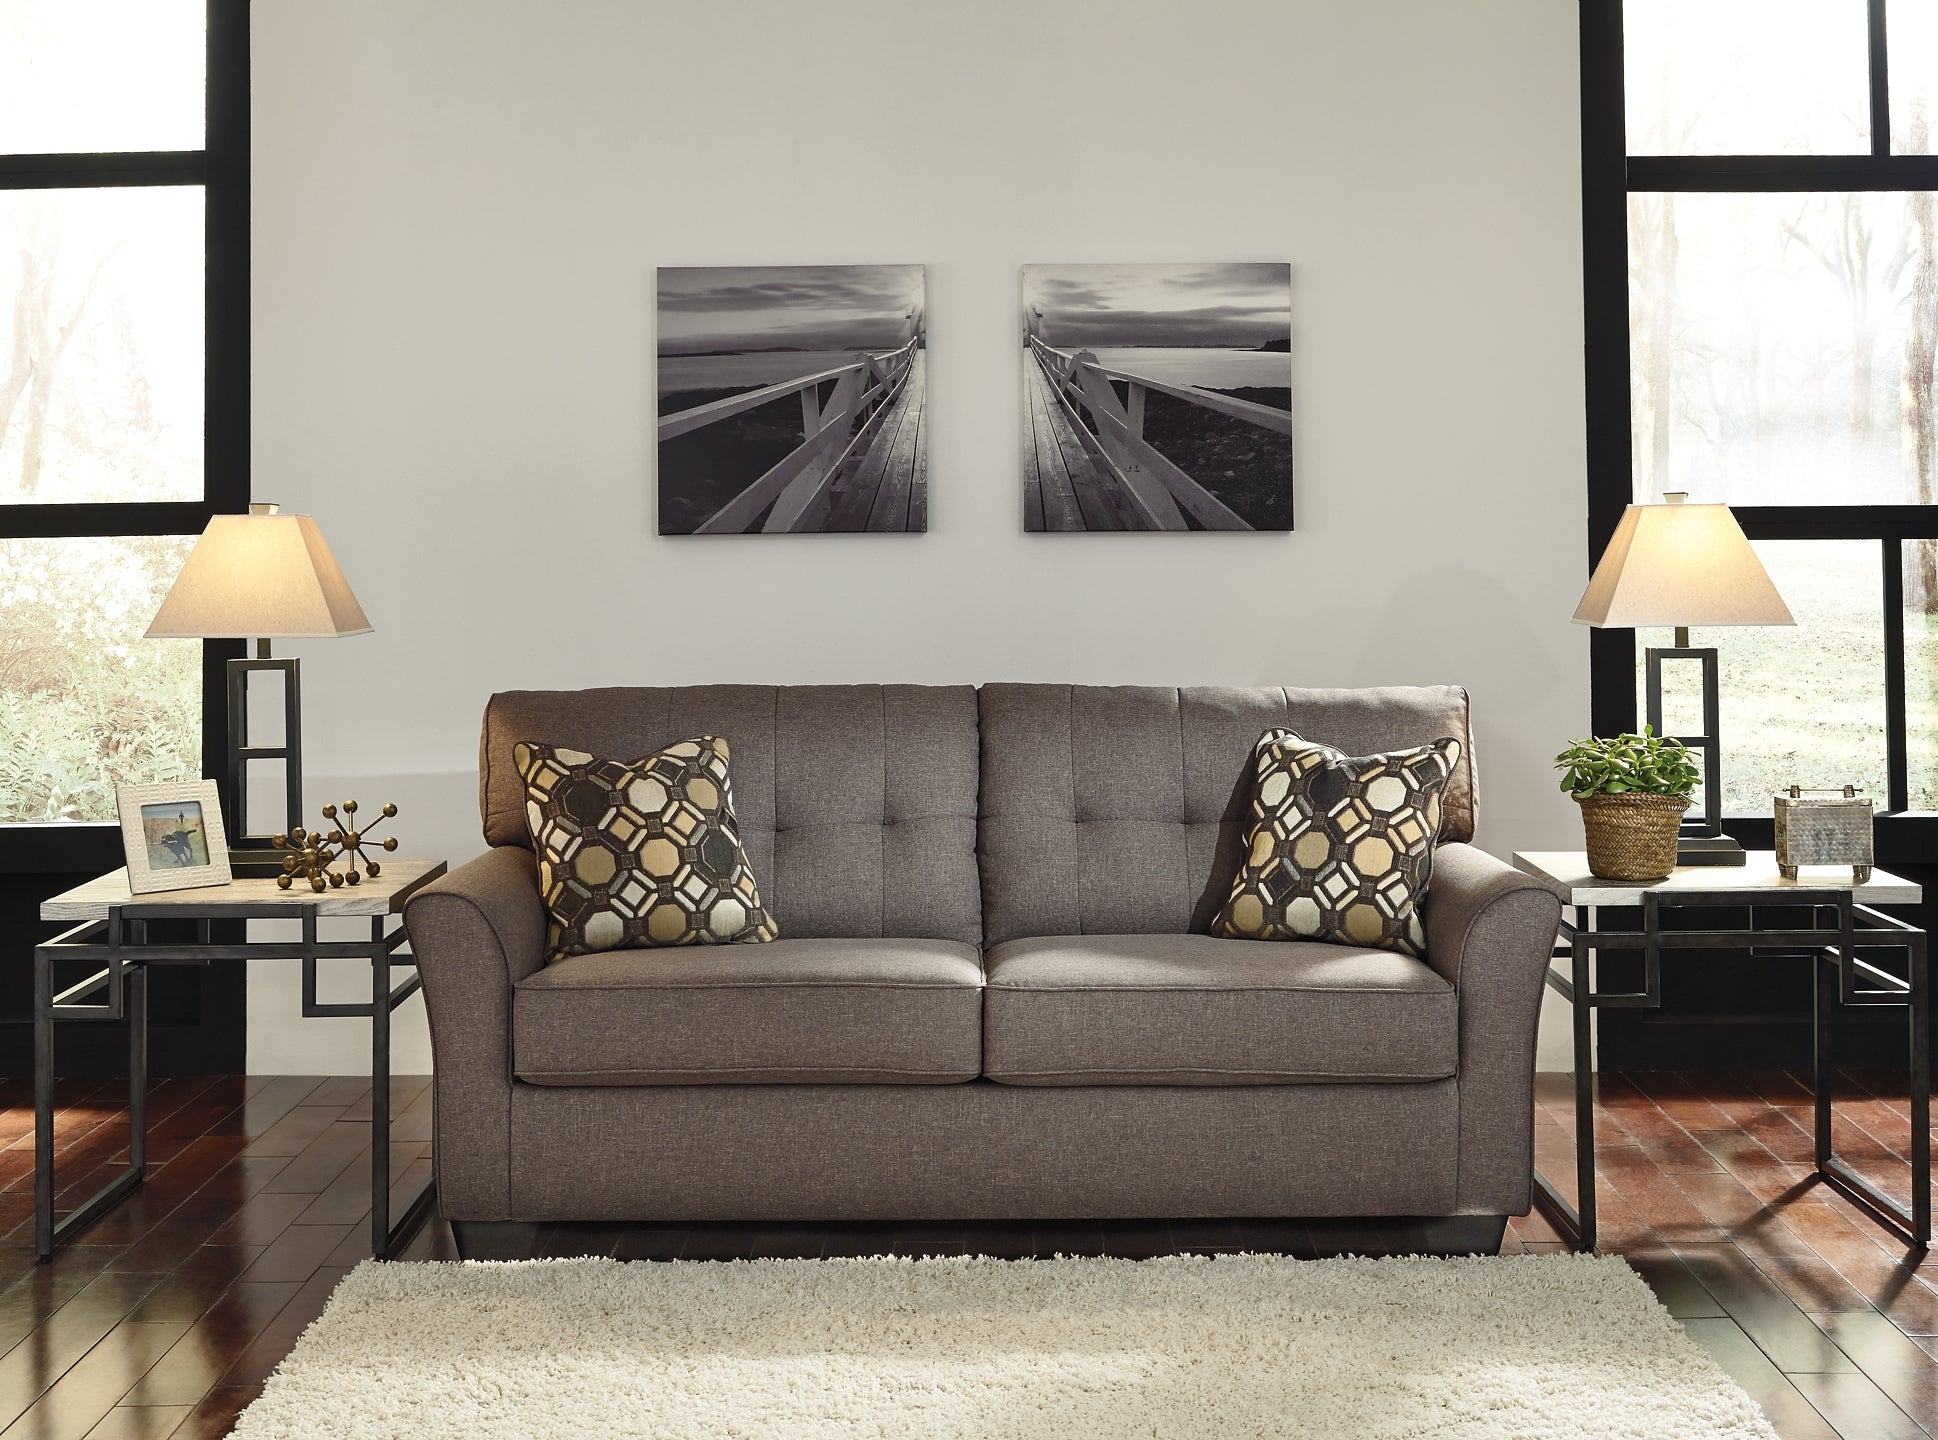 Tibbee Sofa and Chaise at Cloud 9 Mattress & Furniture furniture, home furnishing, home decor